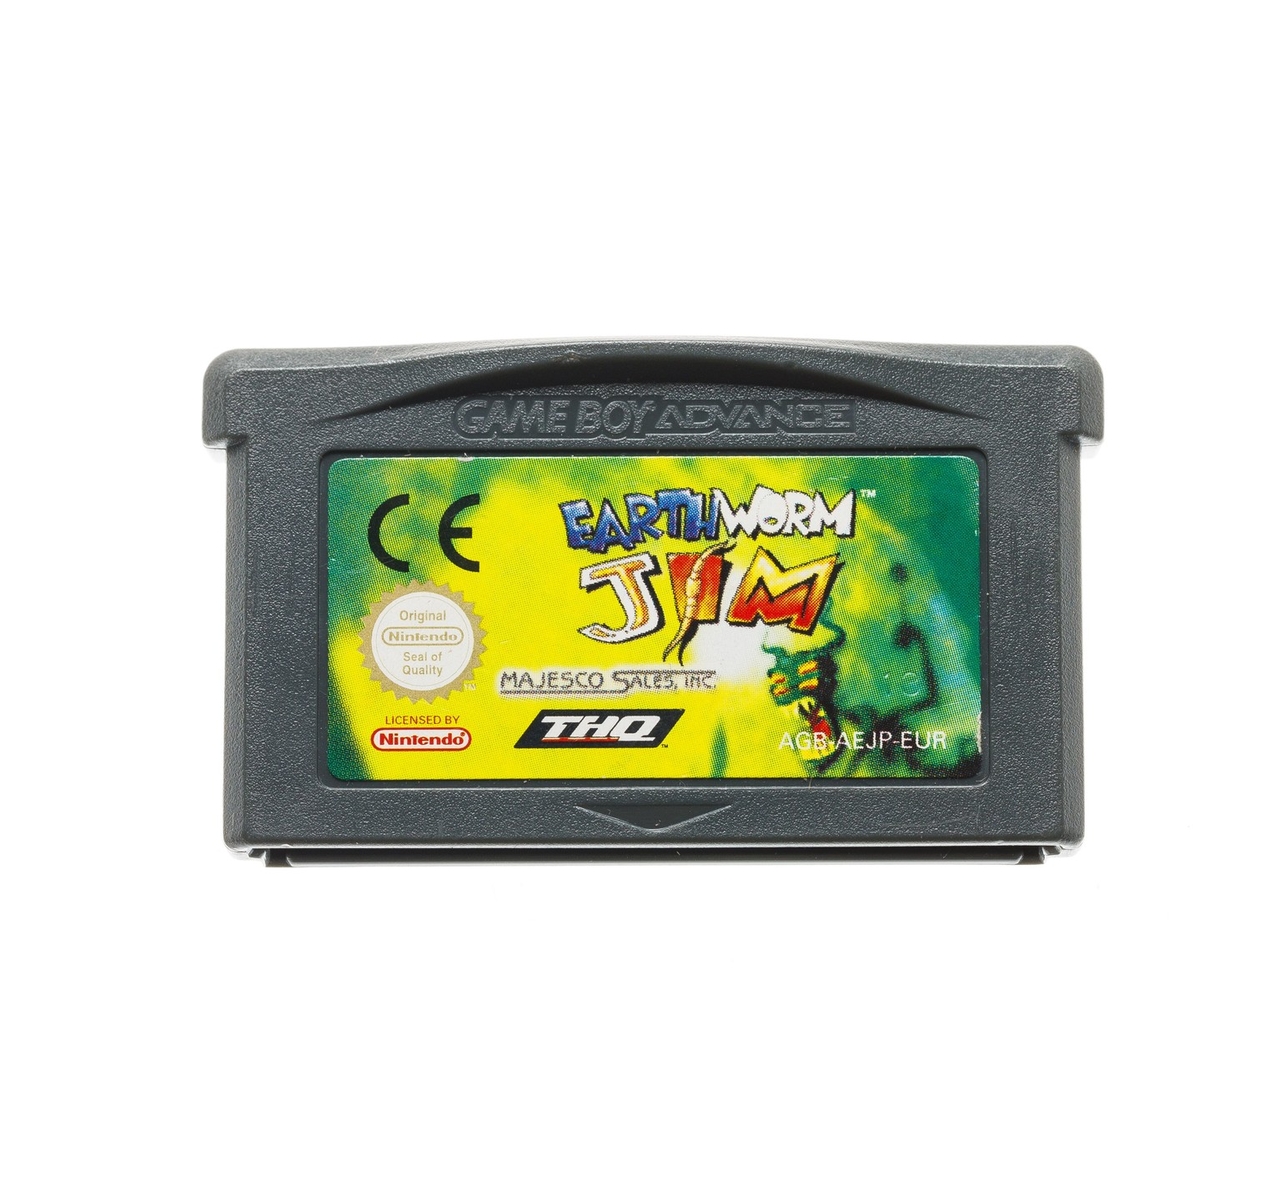 Earthworm Jim - Gameboy Advance Games